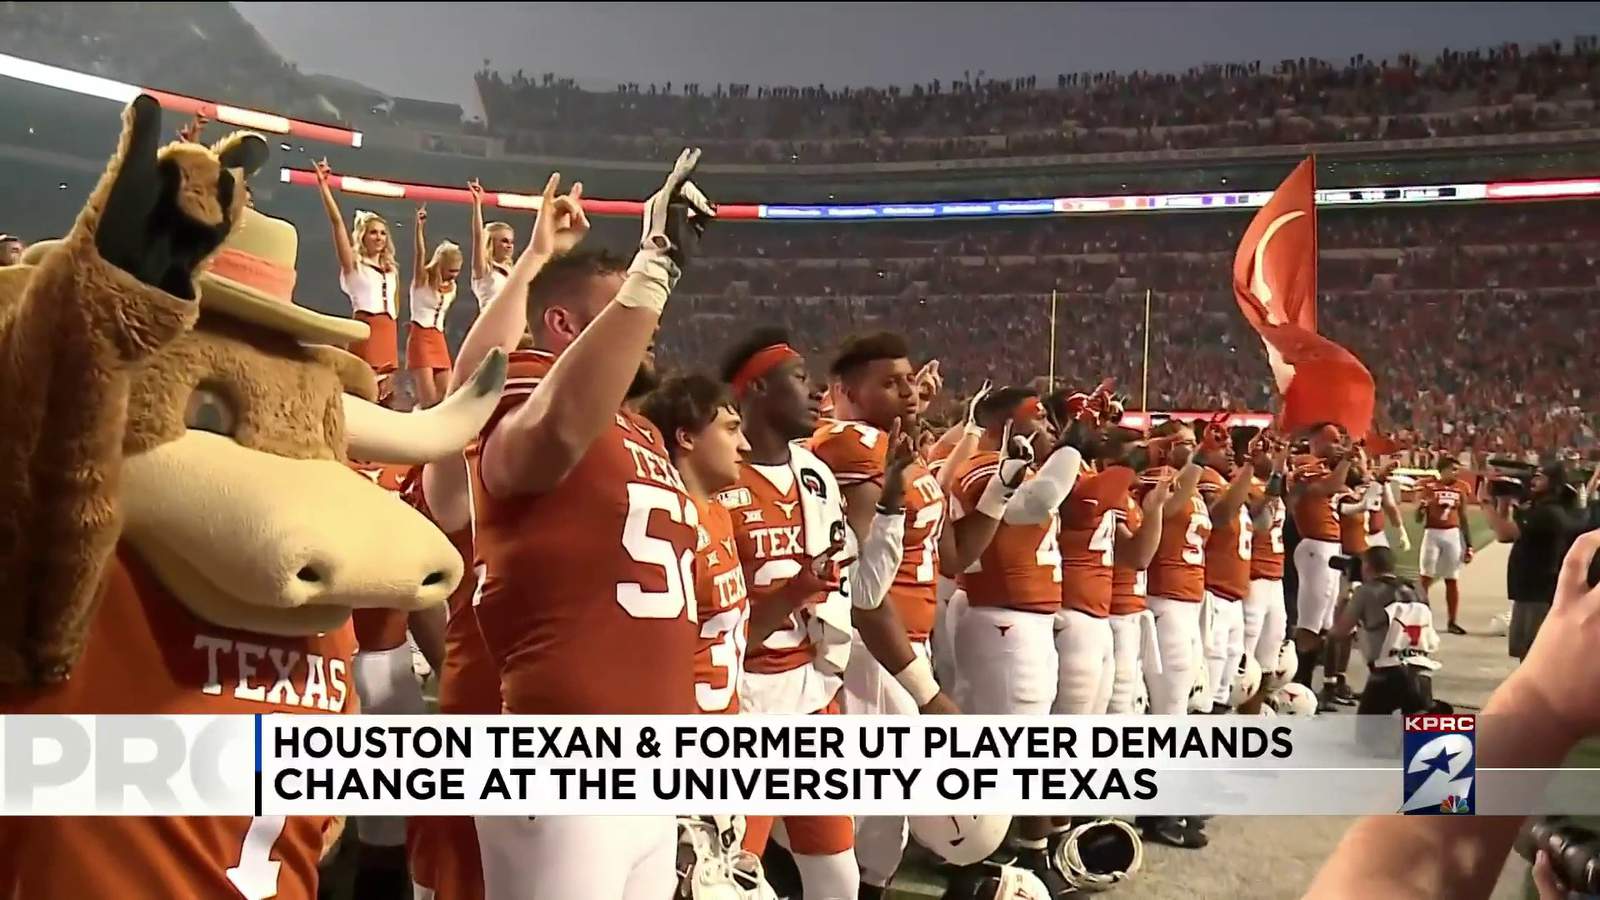 Houston Texan and former UT player demands change at UT